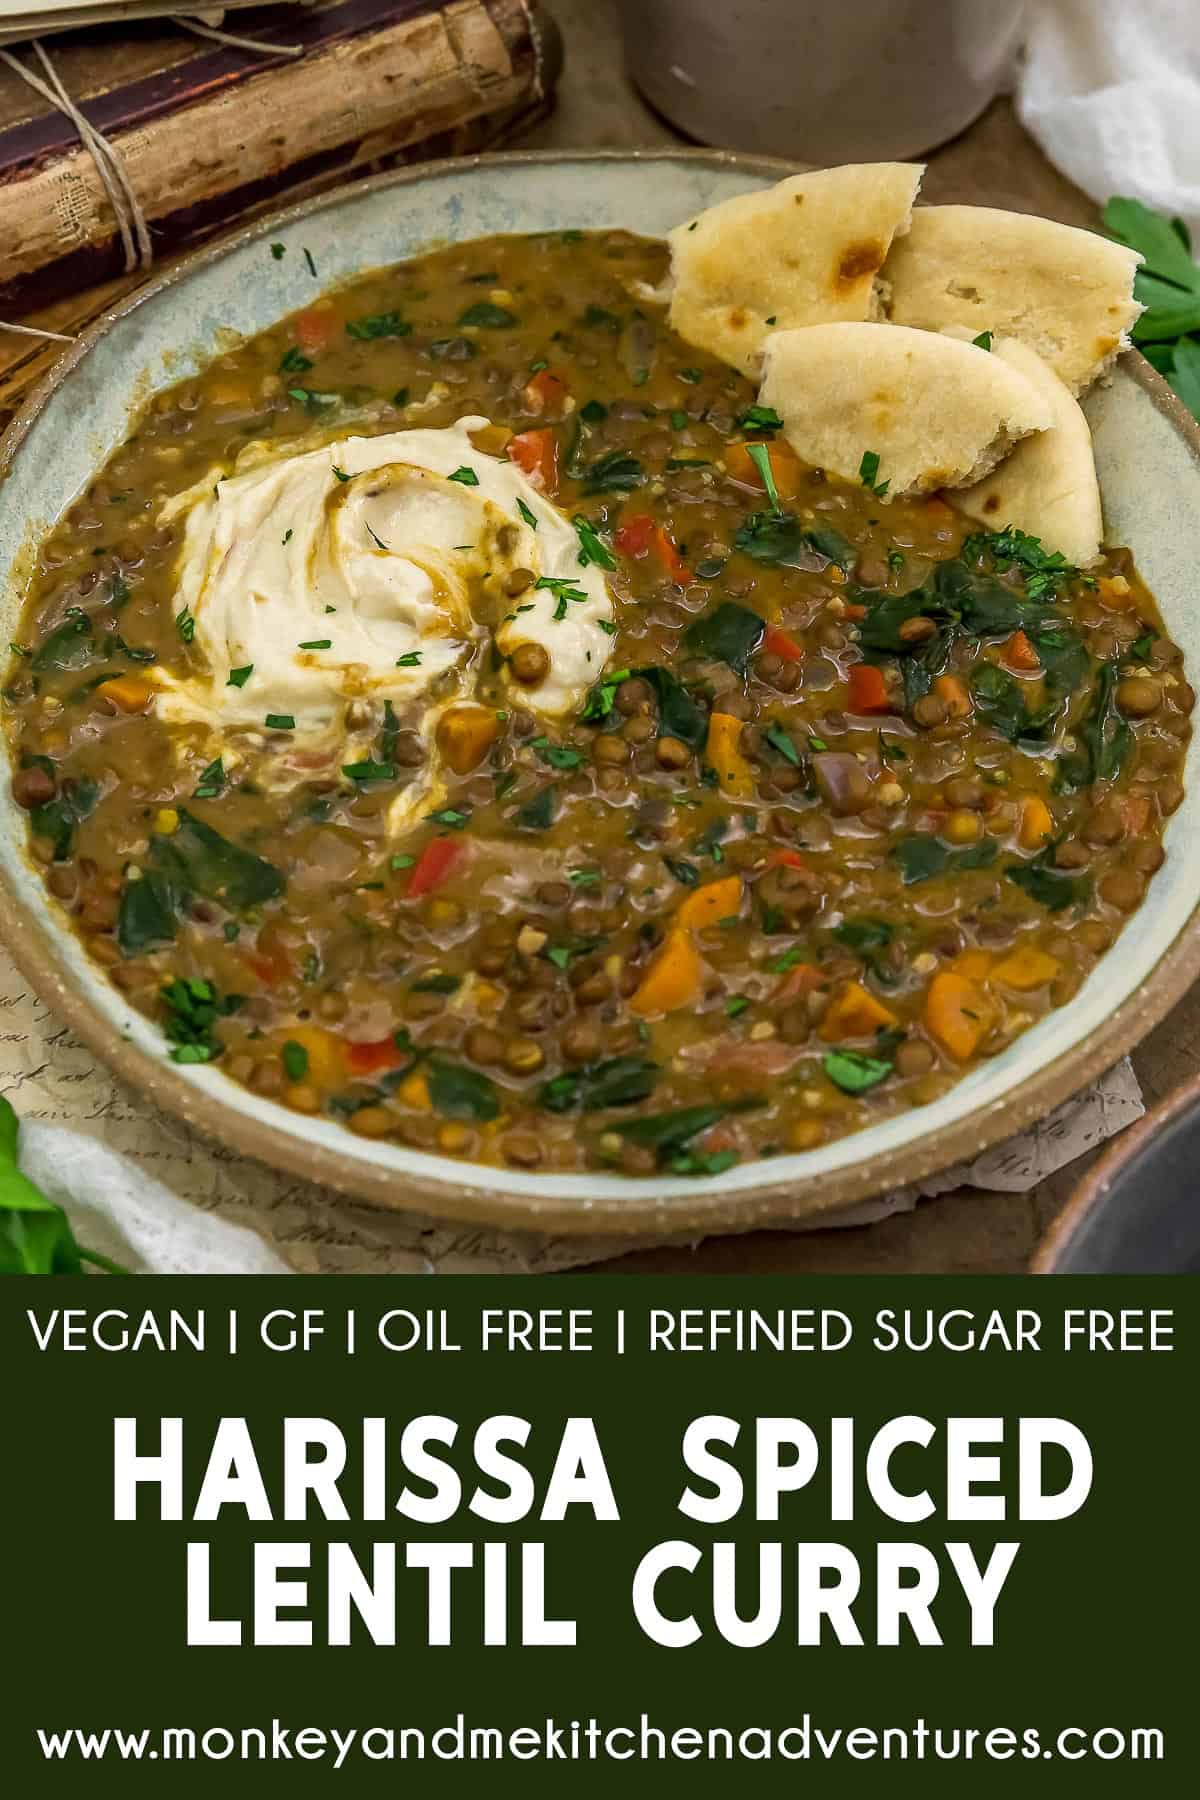 Harissa Spiced Lentil Curry with text description